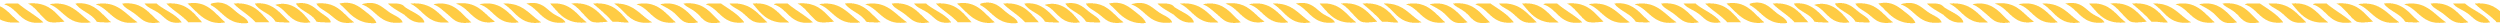 border_yellow